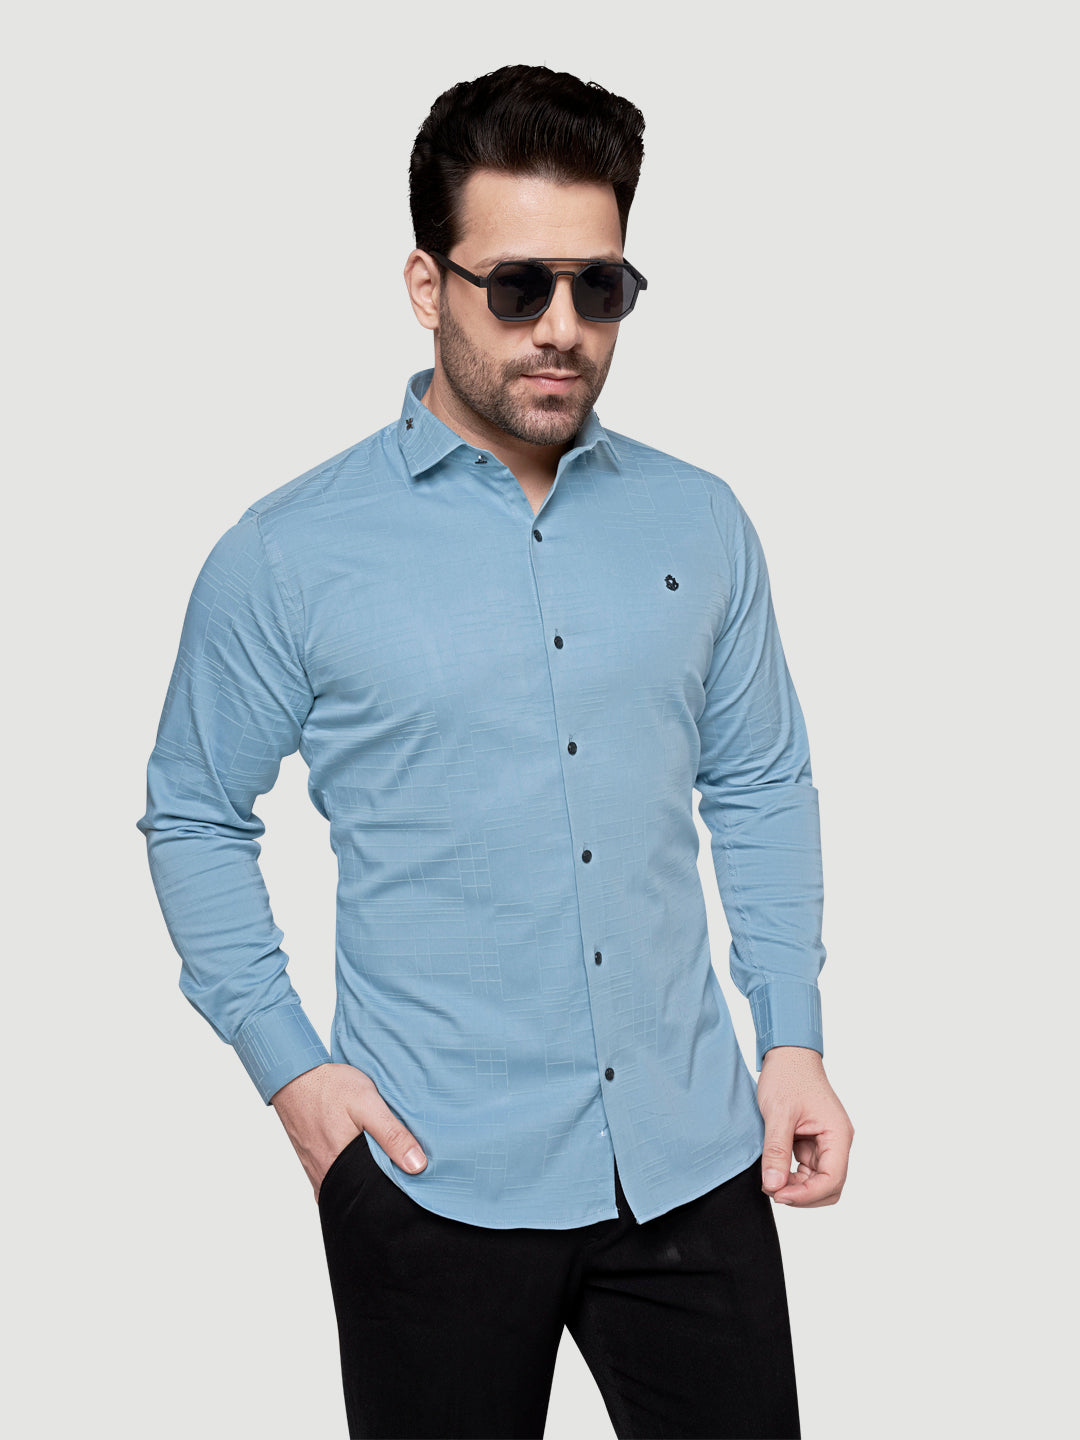 Men's Designer Shirt with Collar Accessory & Broach-4